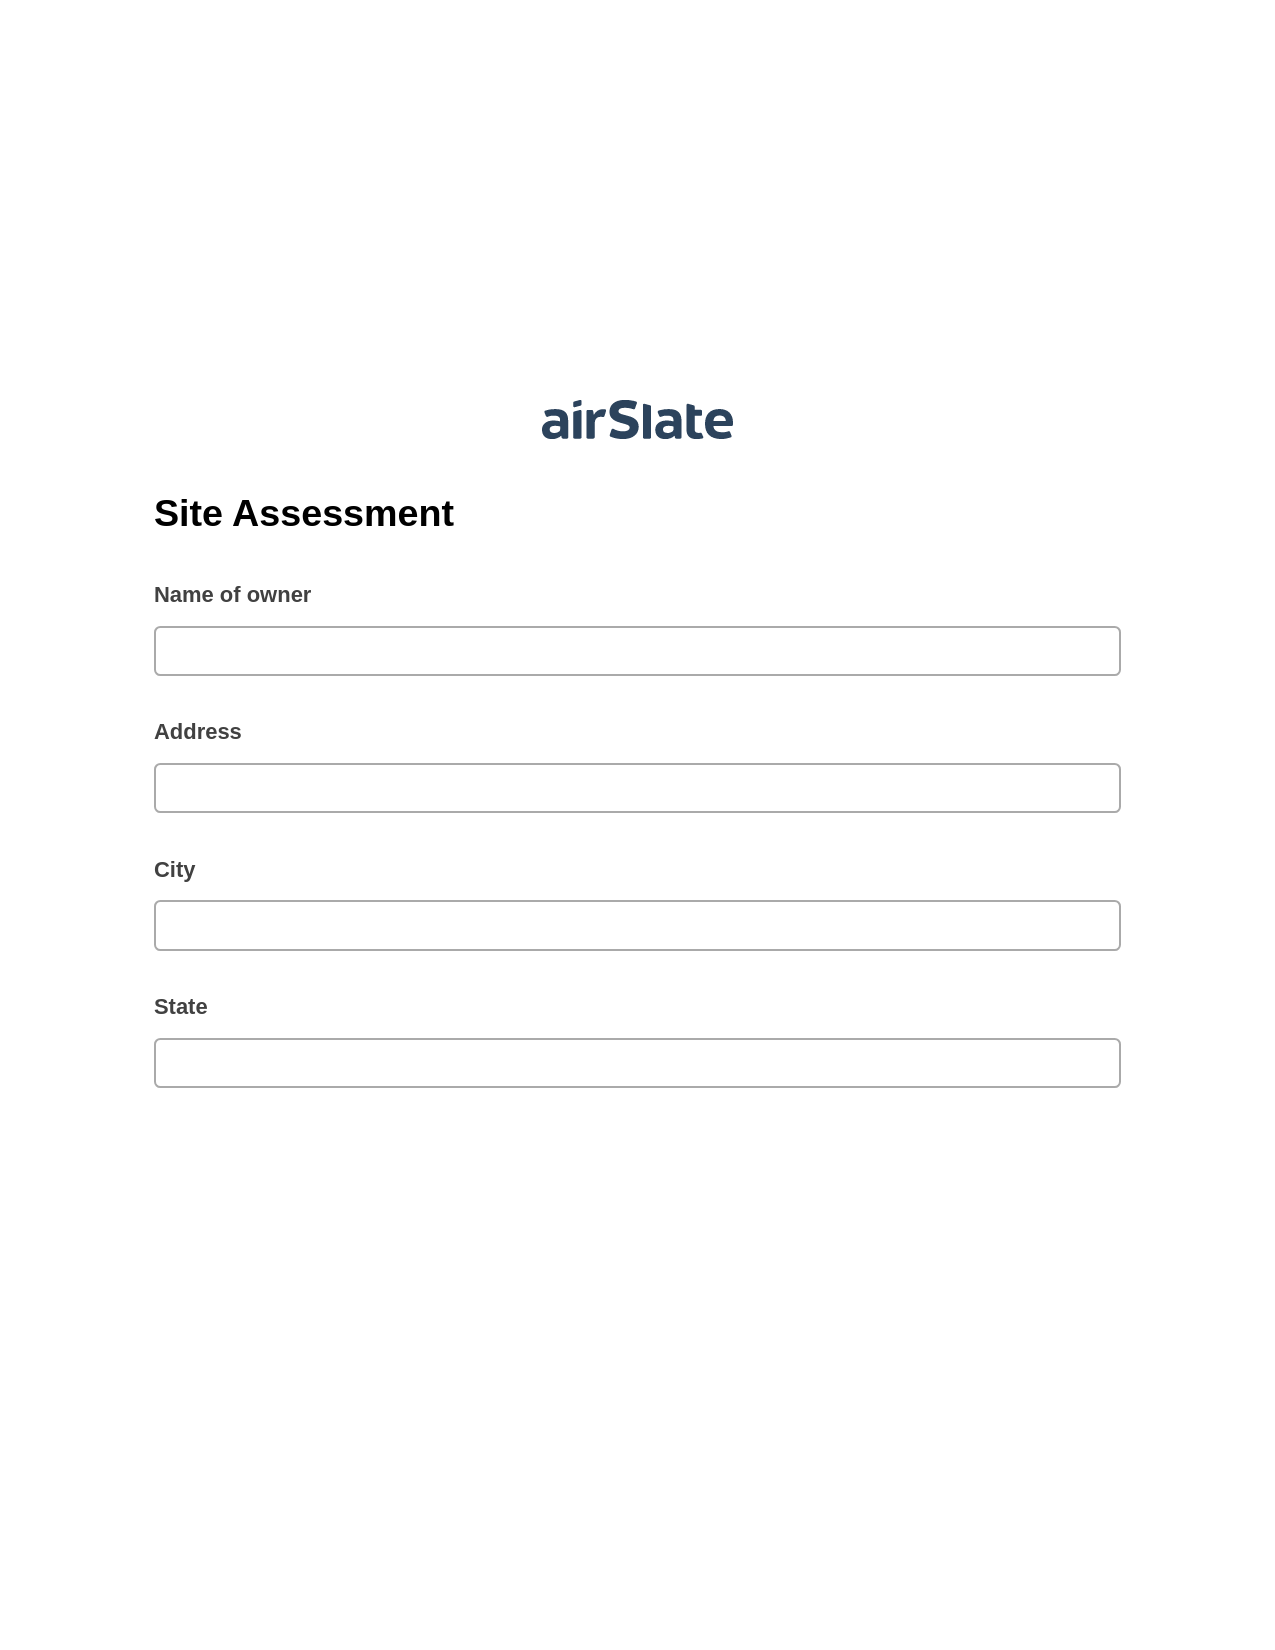 Multirole Site Assessment Pre-fill Slate from MS Dynamics 365 Records Bot, SendGrid send Campaign bot, Dropbox Bot